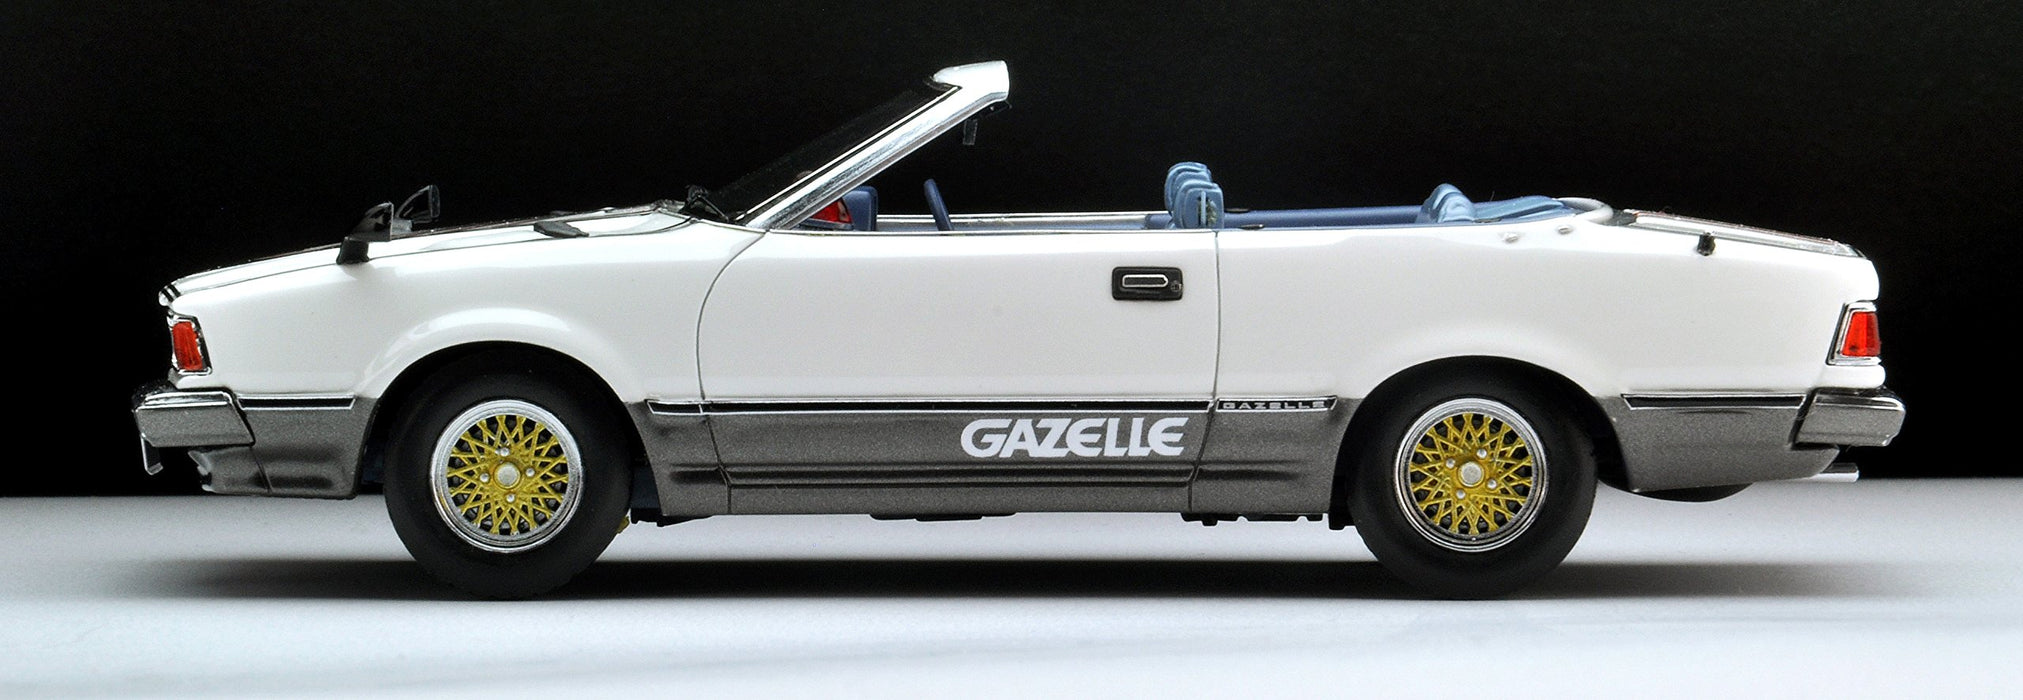 Tomytec Ignition Model Western Police Gazelle 1/43 Scale Finished Product